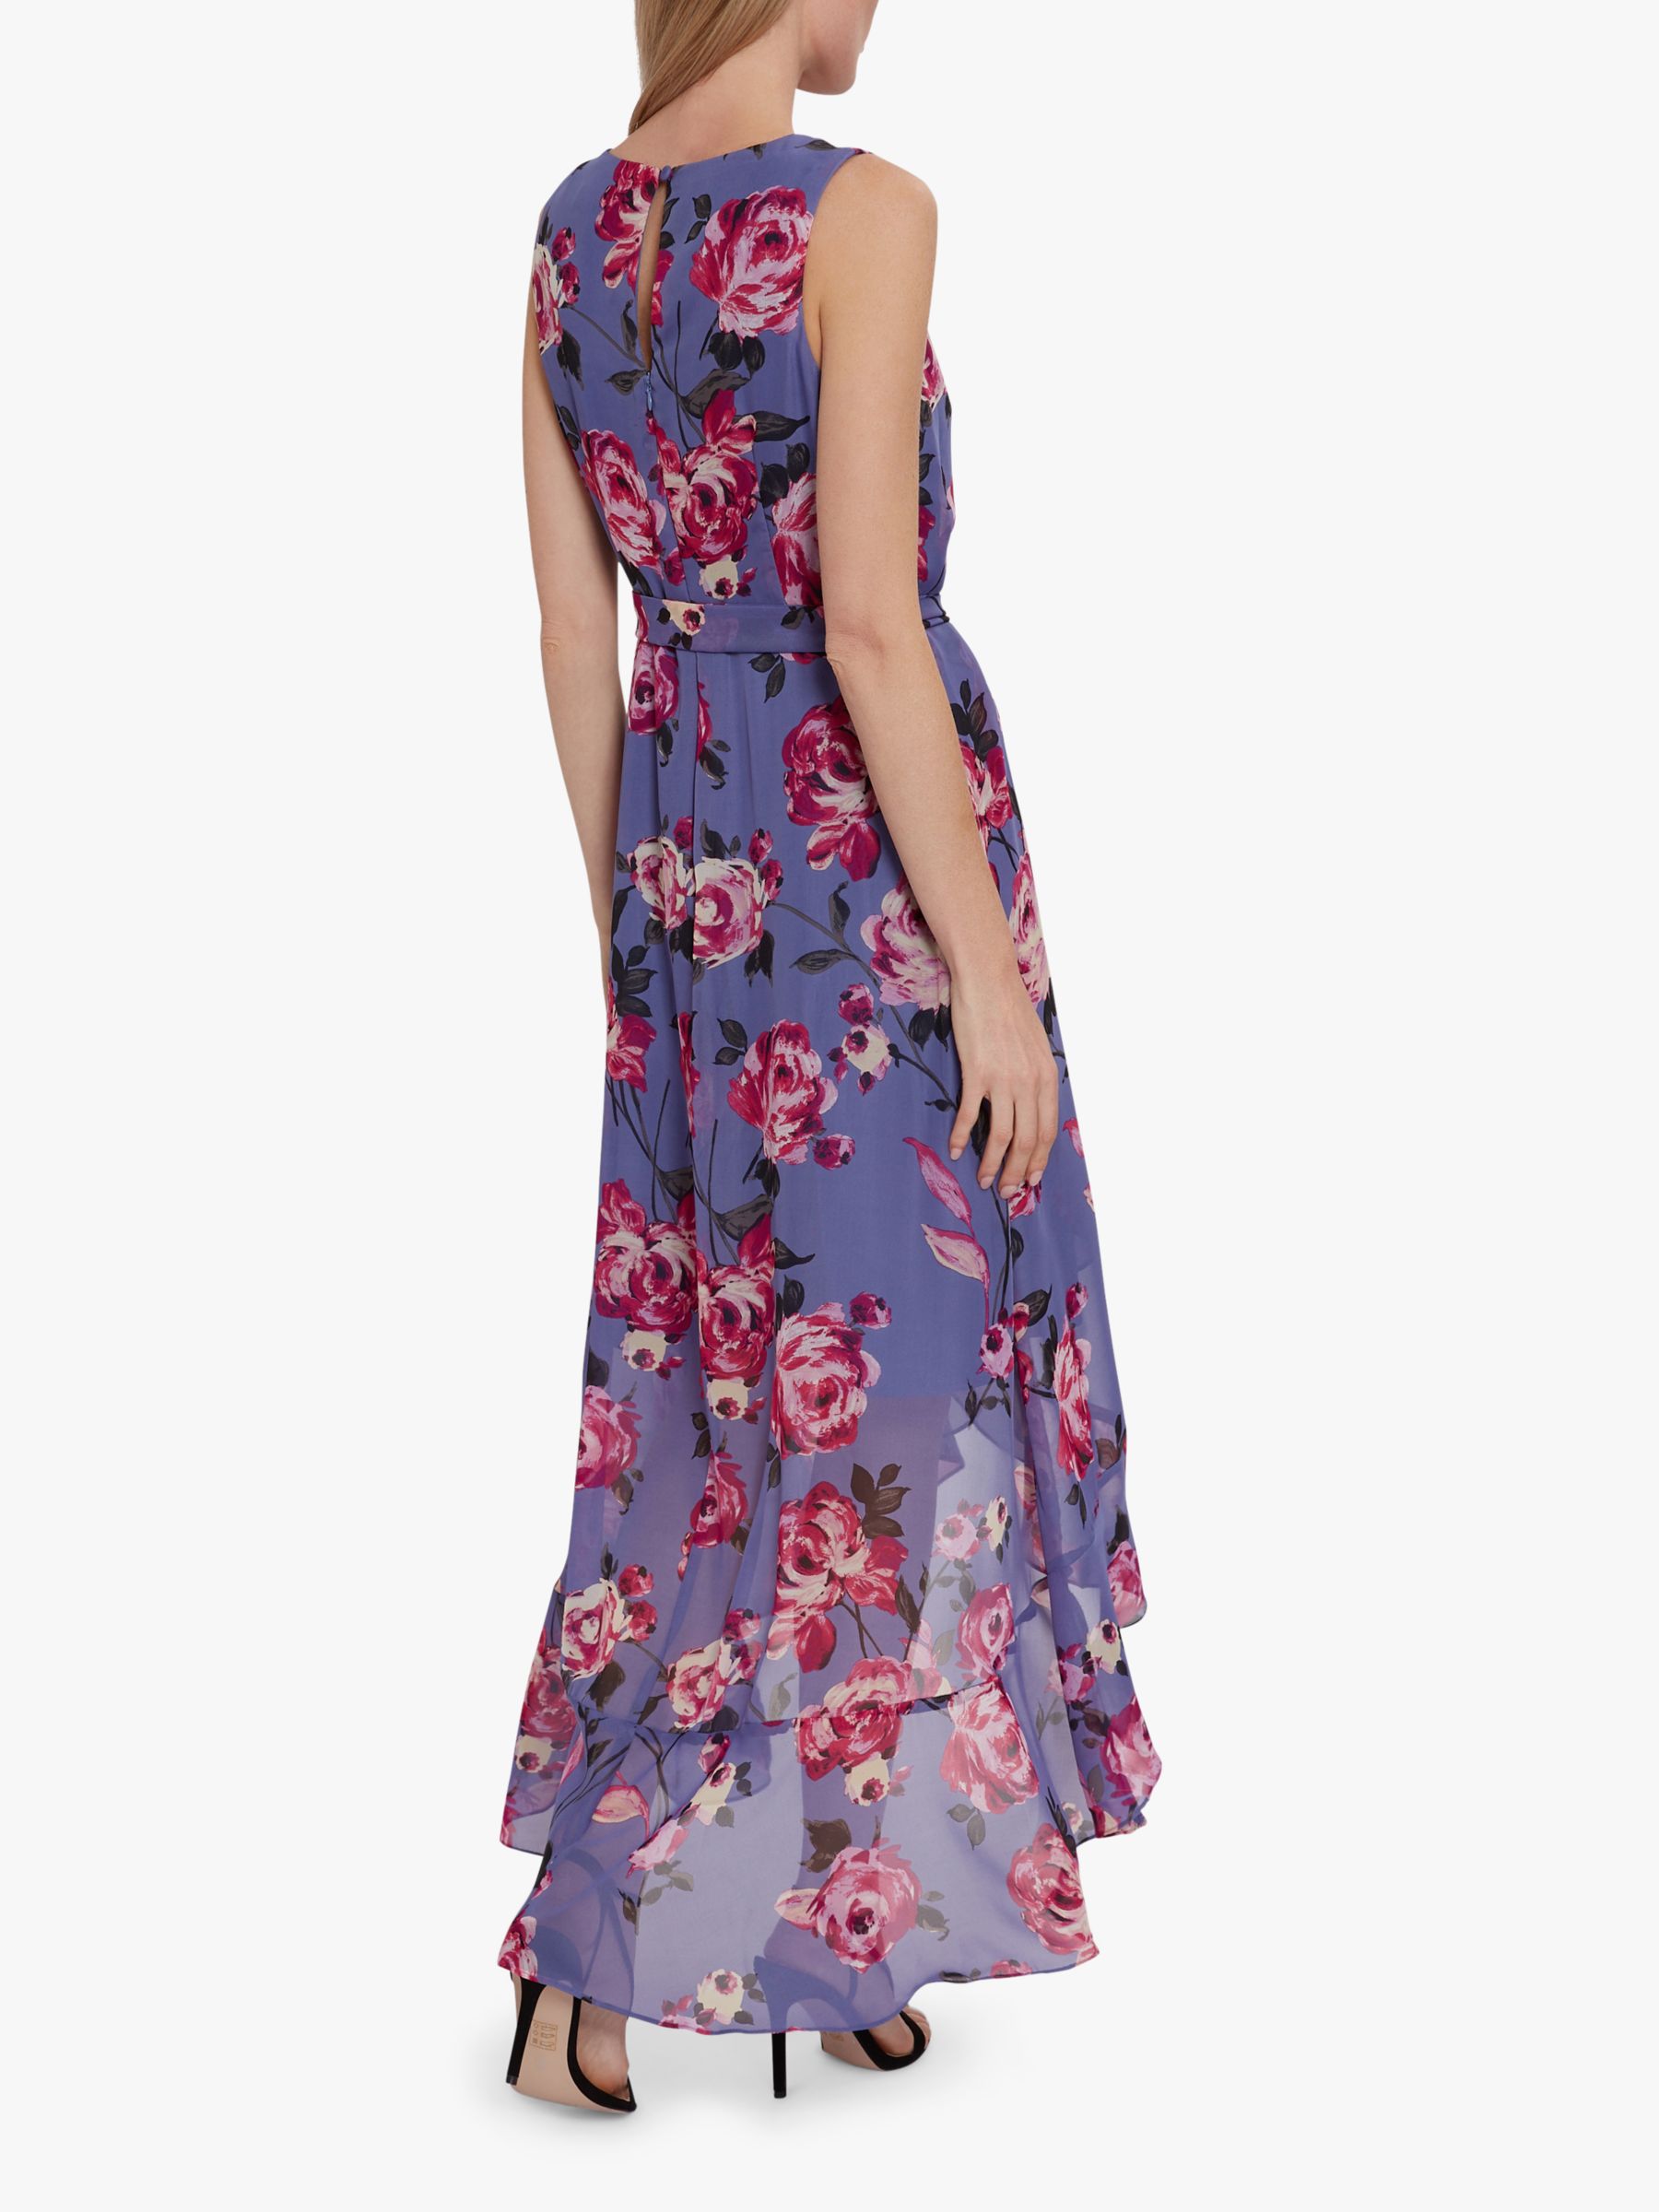 Gina Bacconi Ronna Floral Chiffon Dress, Lilac